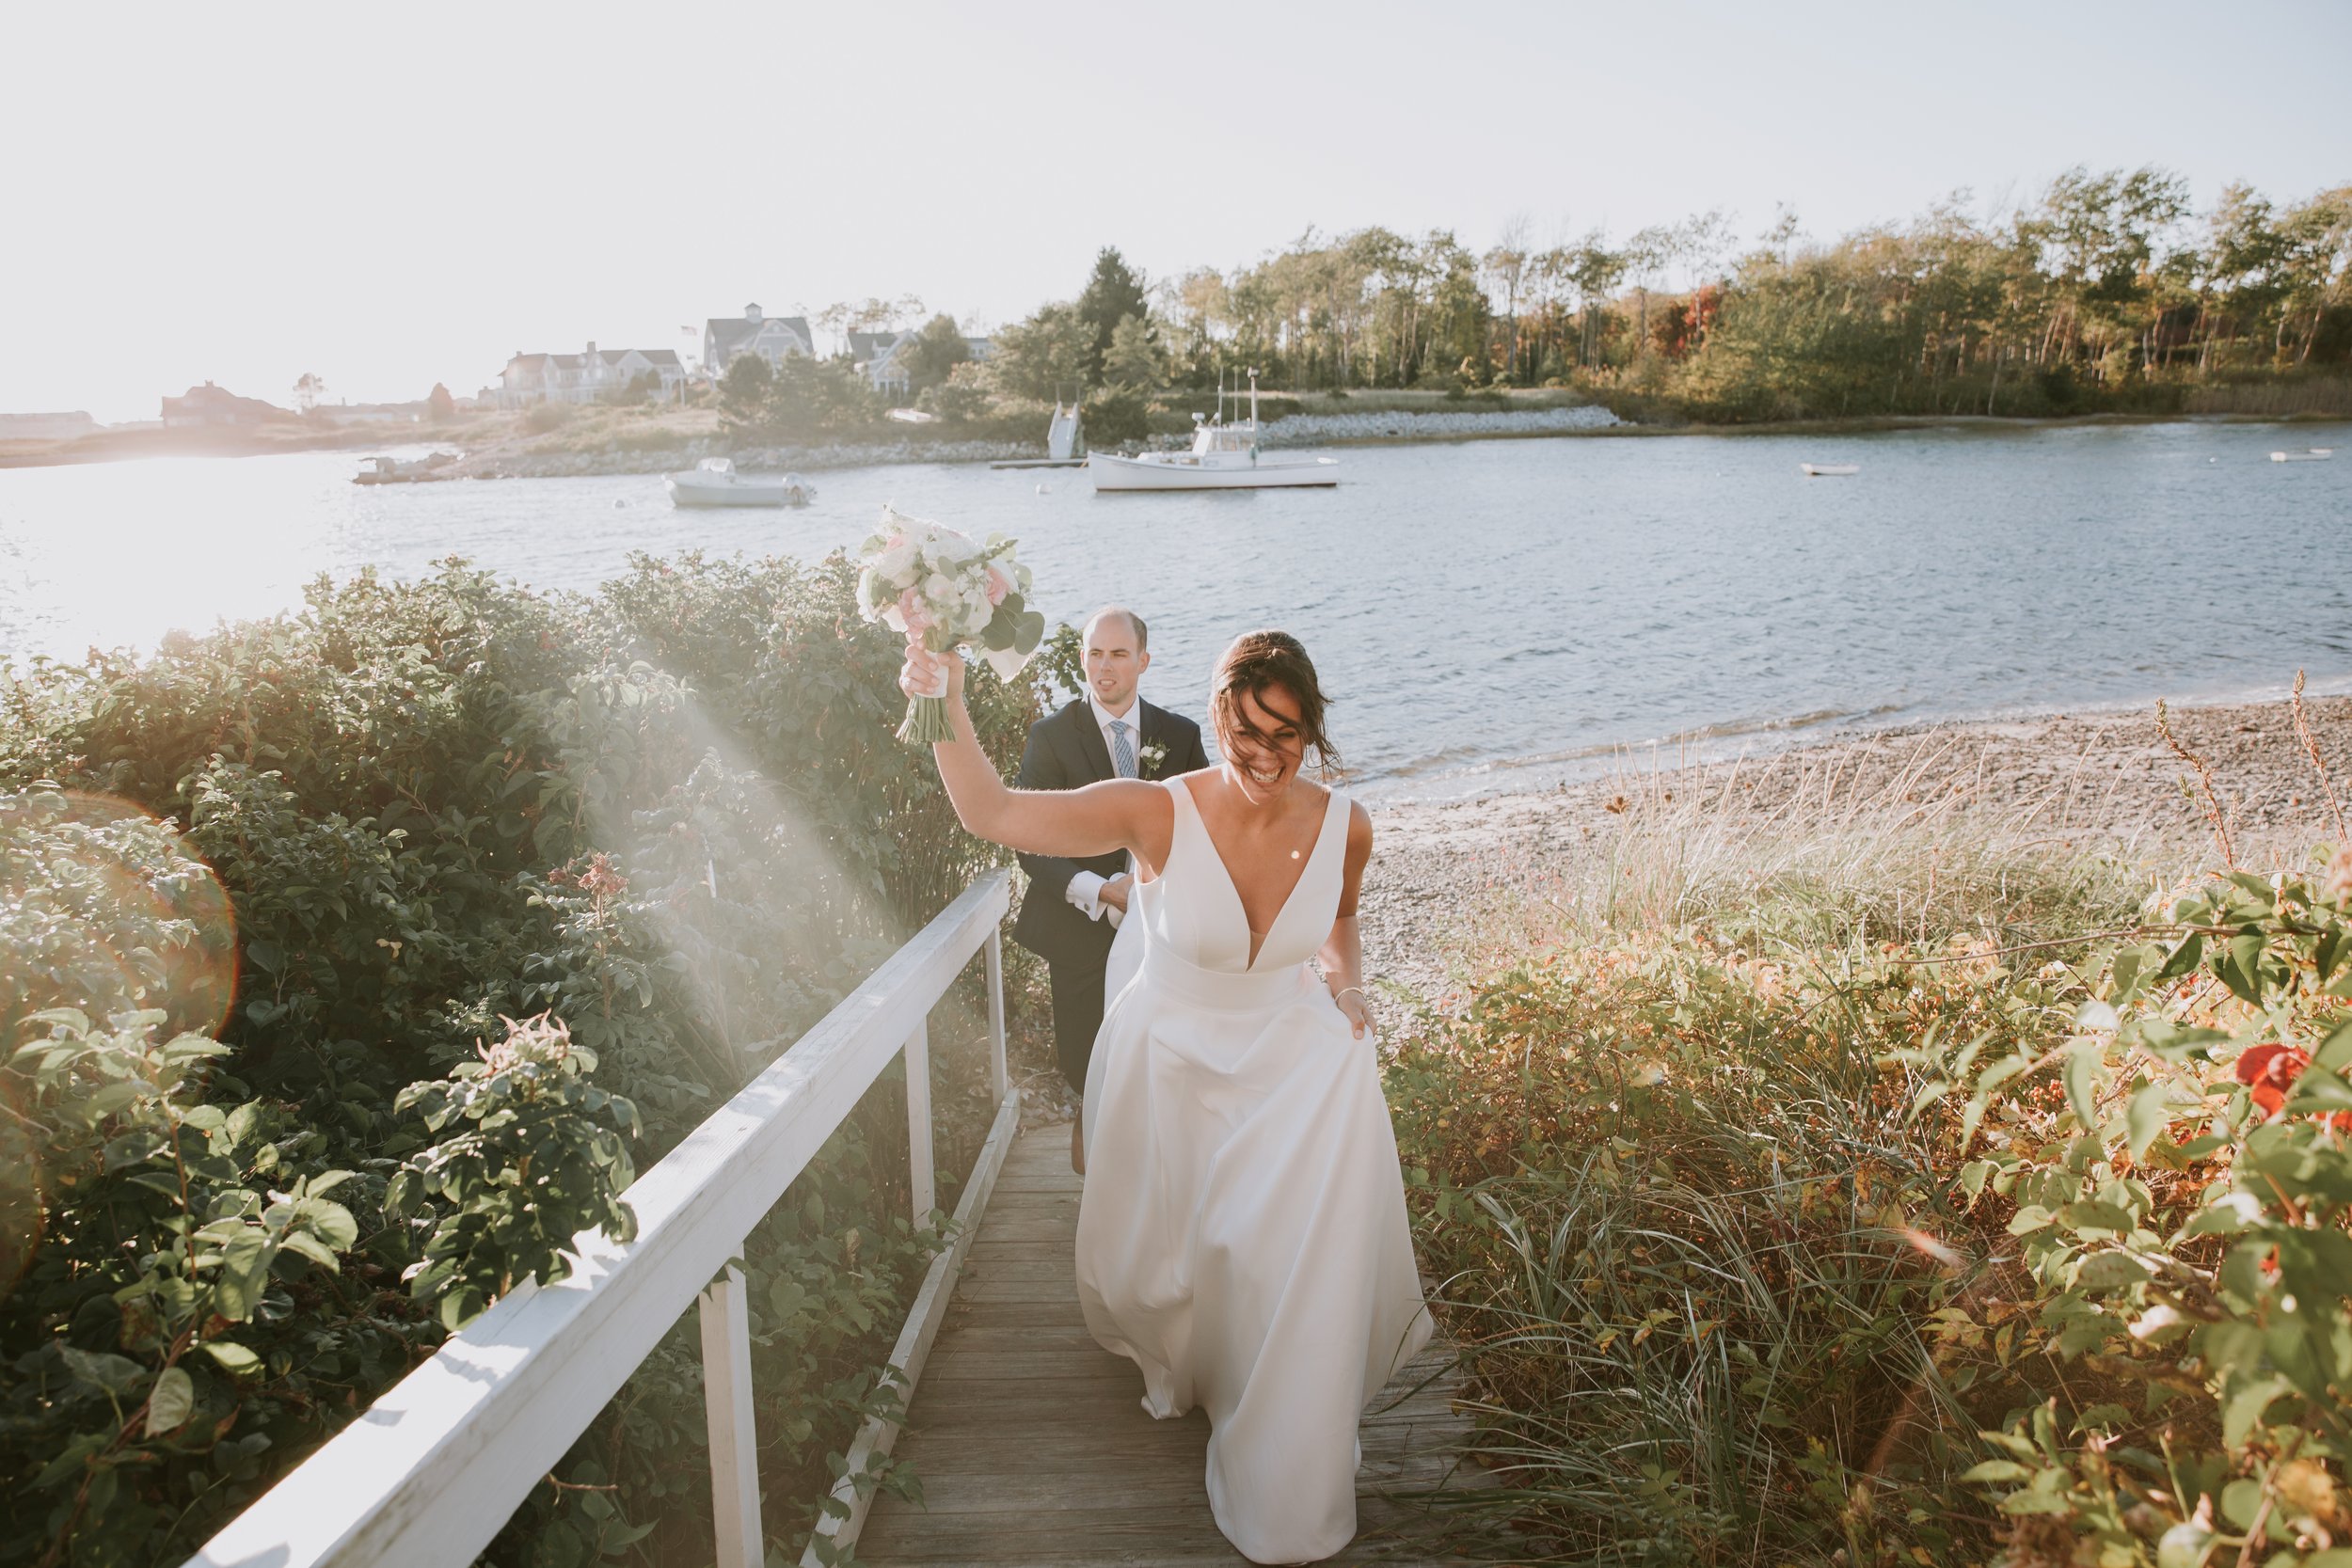 Portland, Maine Wedding Photographer